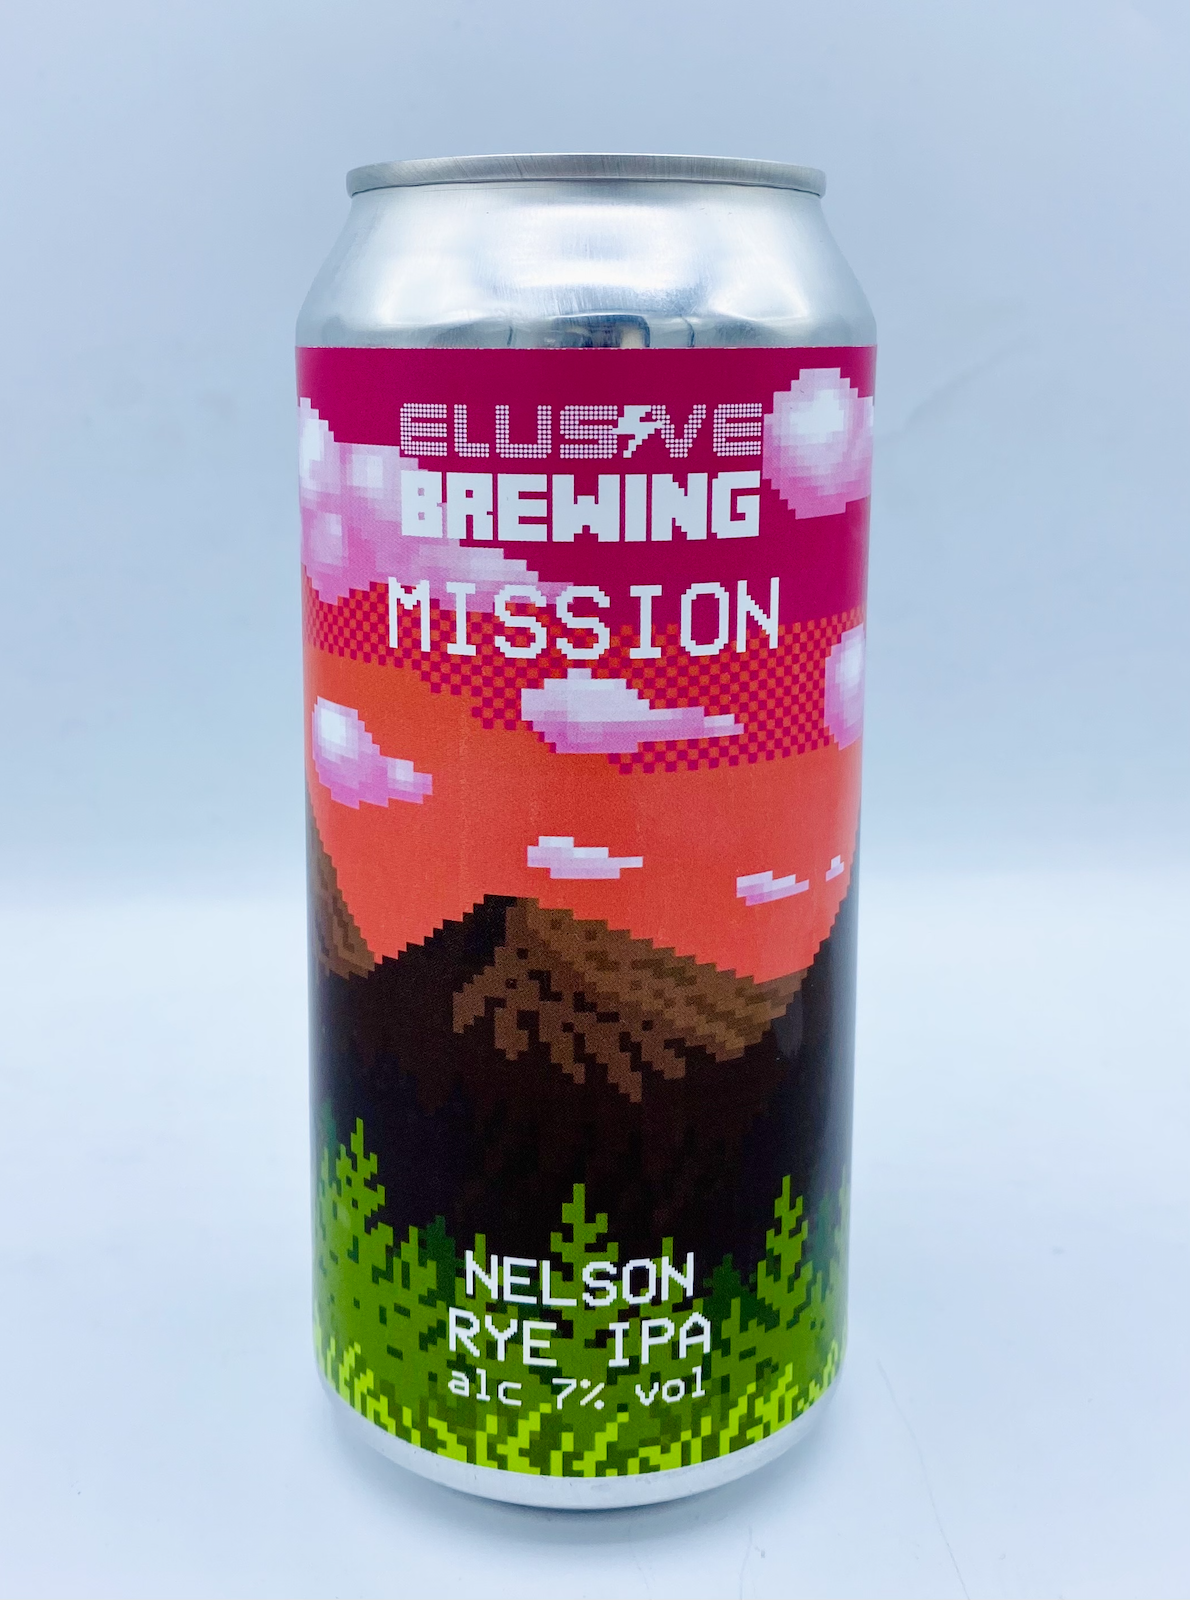 Elusive - Mission 7%